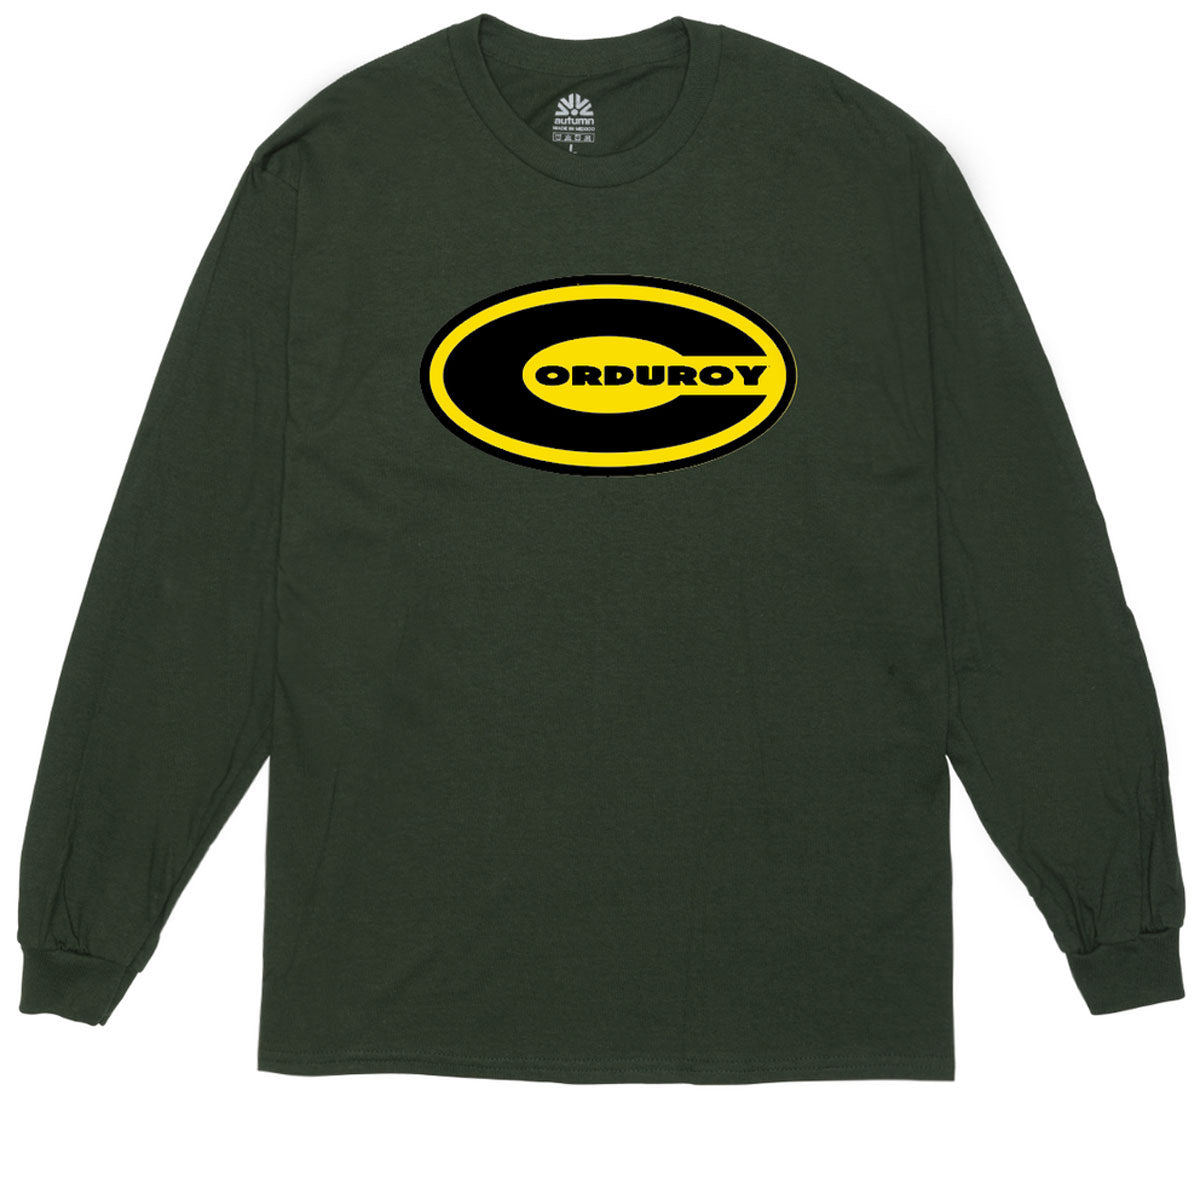 Corduroy Oval Long Sleeve T-Shirt - Alpine image 1